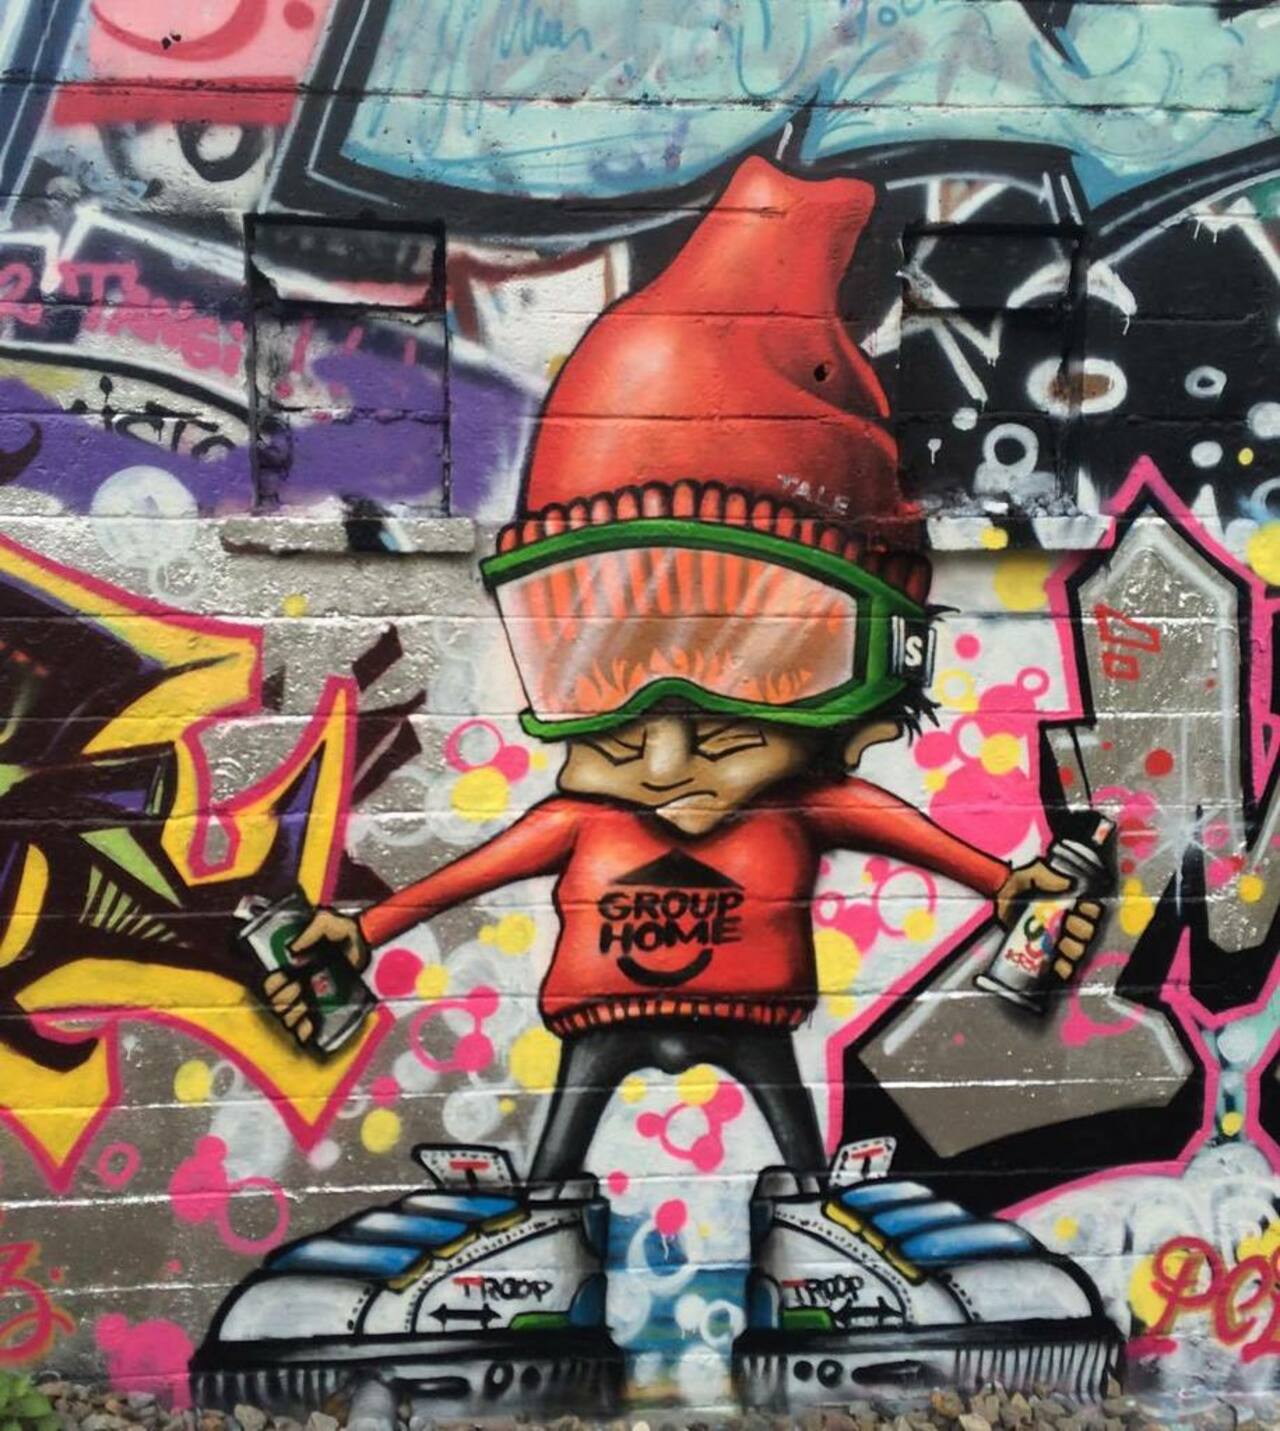 RT @artpushr: via #insta_fdy "http://bit.ly/1M3XeDe" #graffiti #streetart http://t.co/y43QCMFxI0